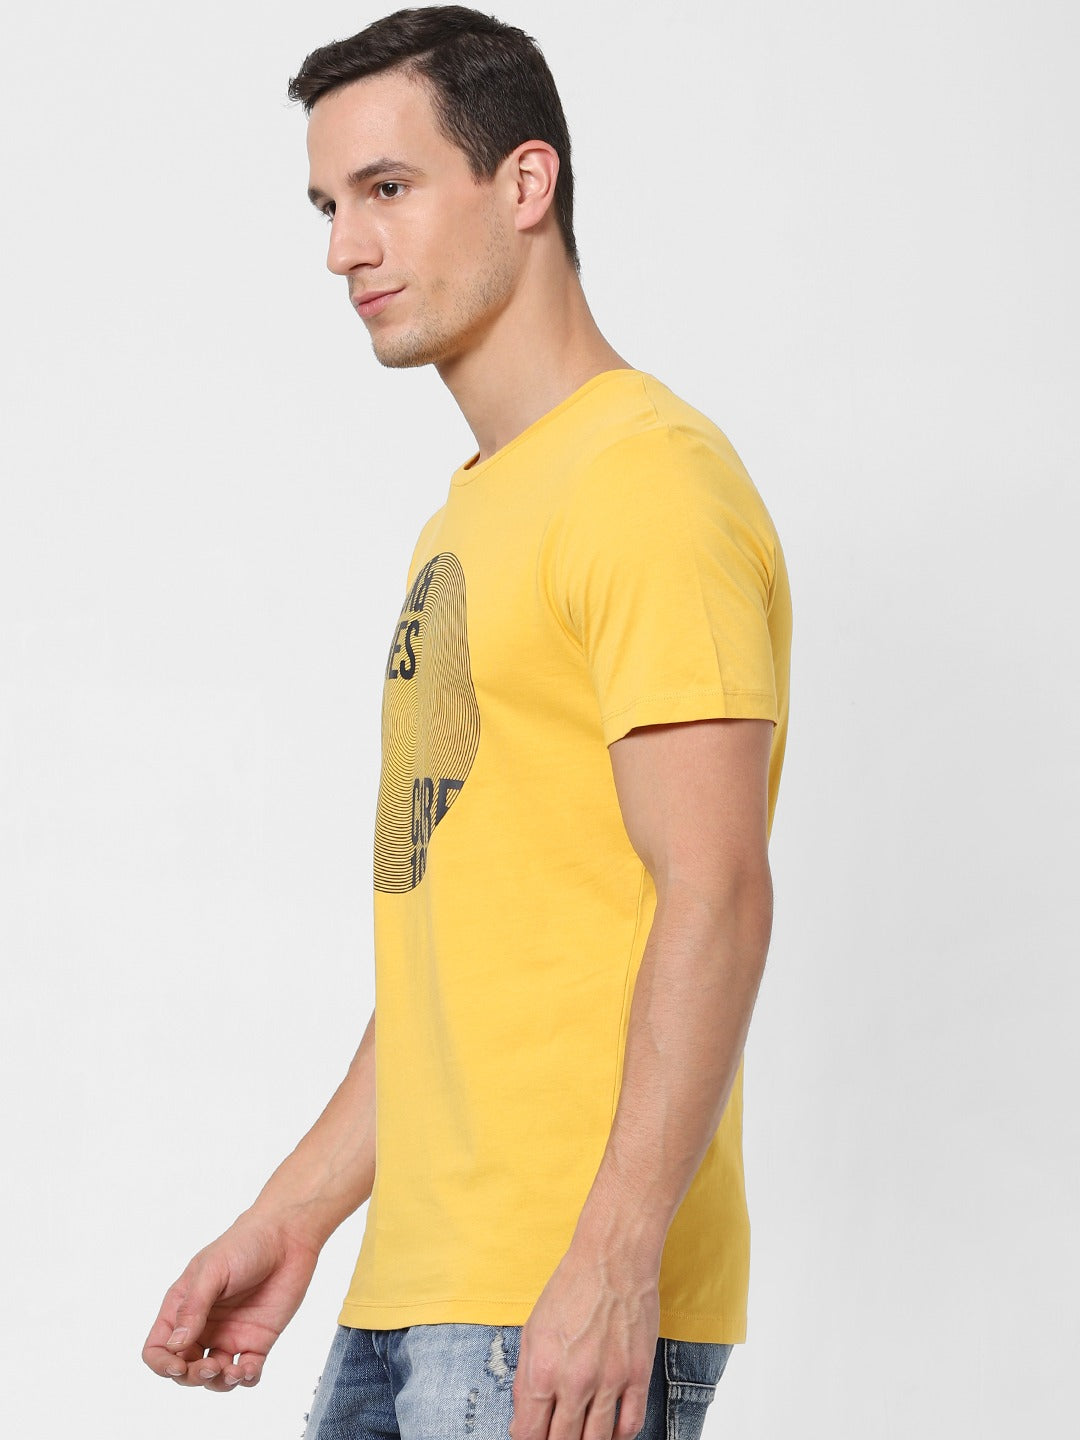 Jack Jones Men Mustard Yellow Printed Slim Fit Round Neck Sustainable Pure Cotton T-shirt-2118656018